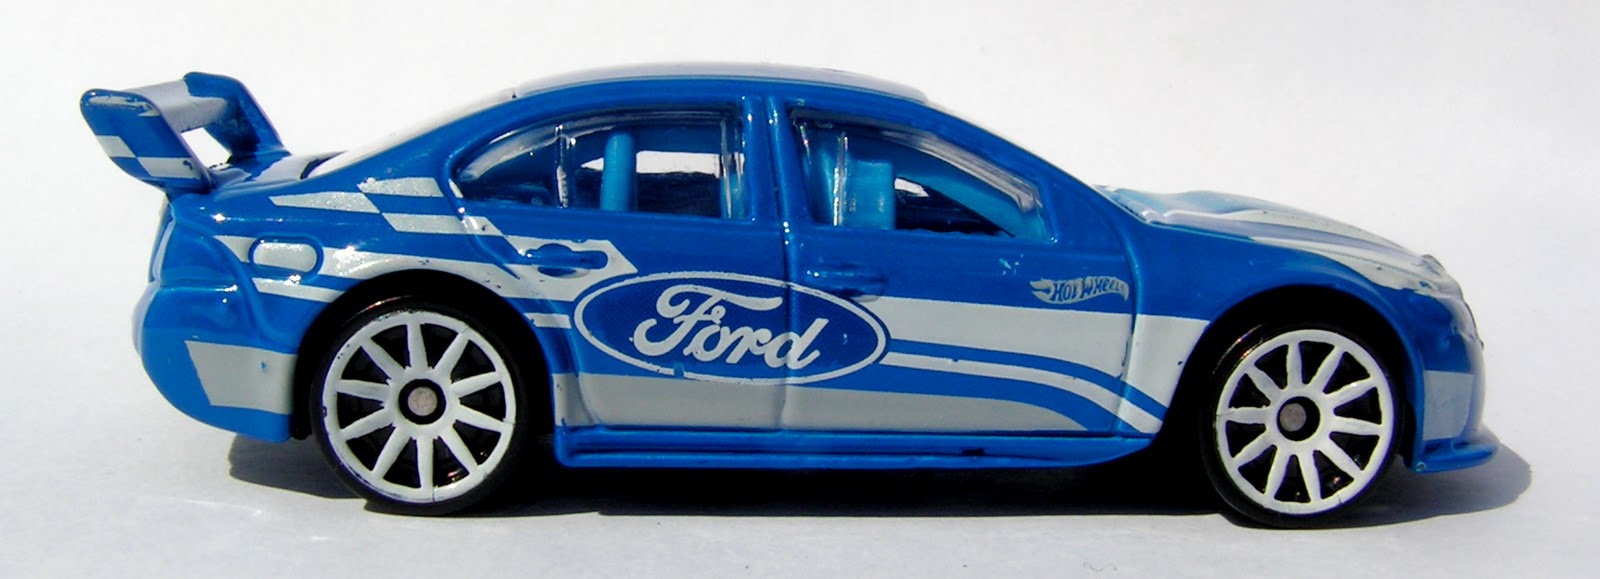 Ford v8 supercar hot laps #8